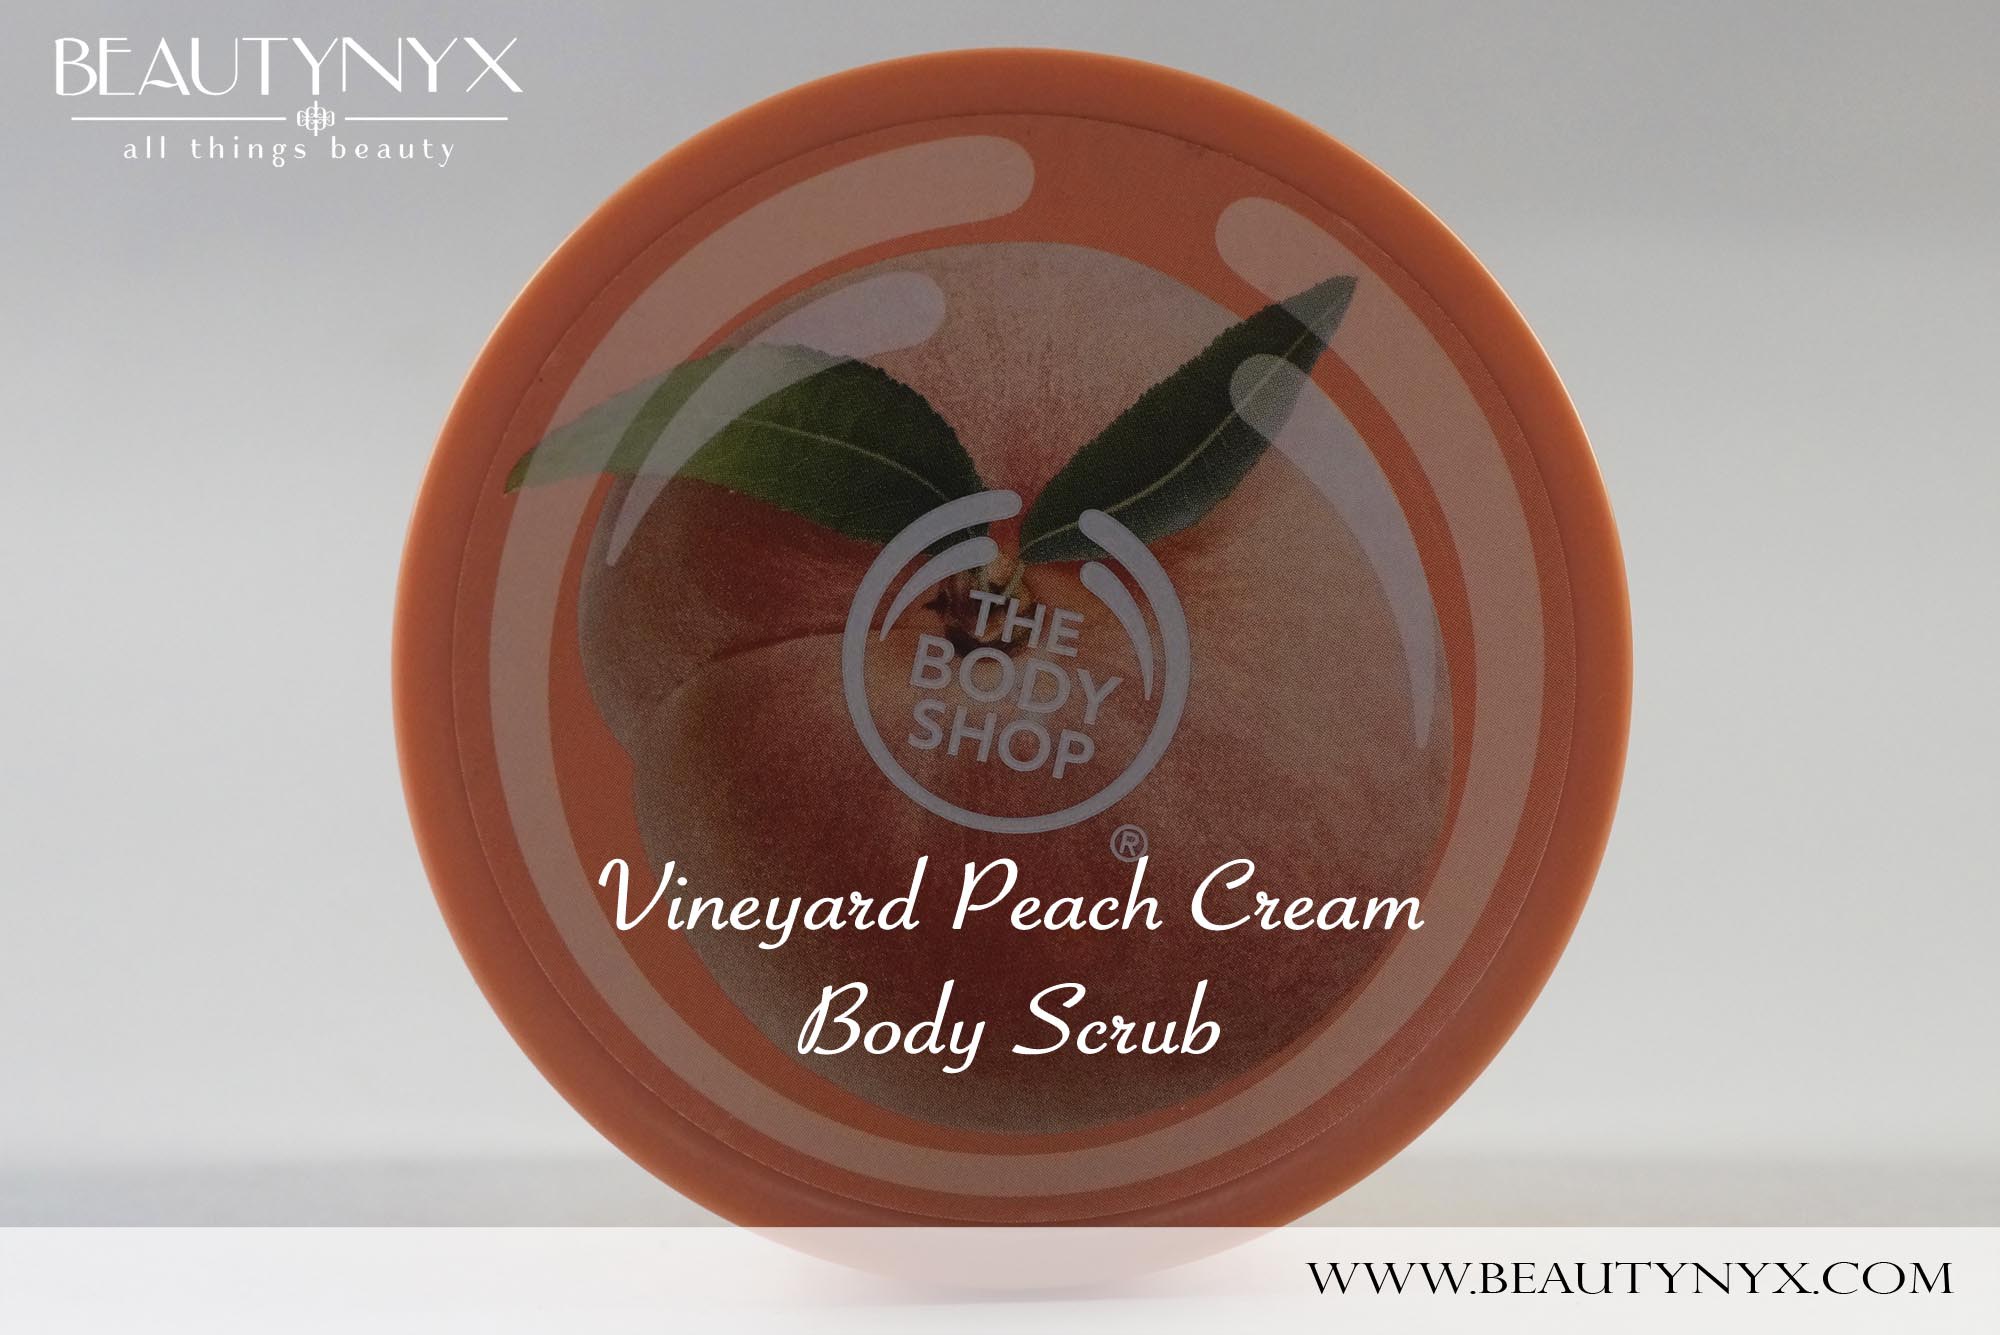 The Body Shop Vineyard Peach Cream Body Scrub | Review ...